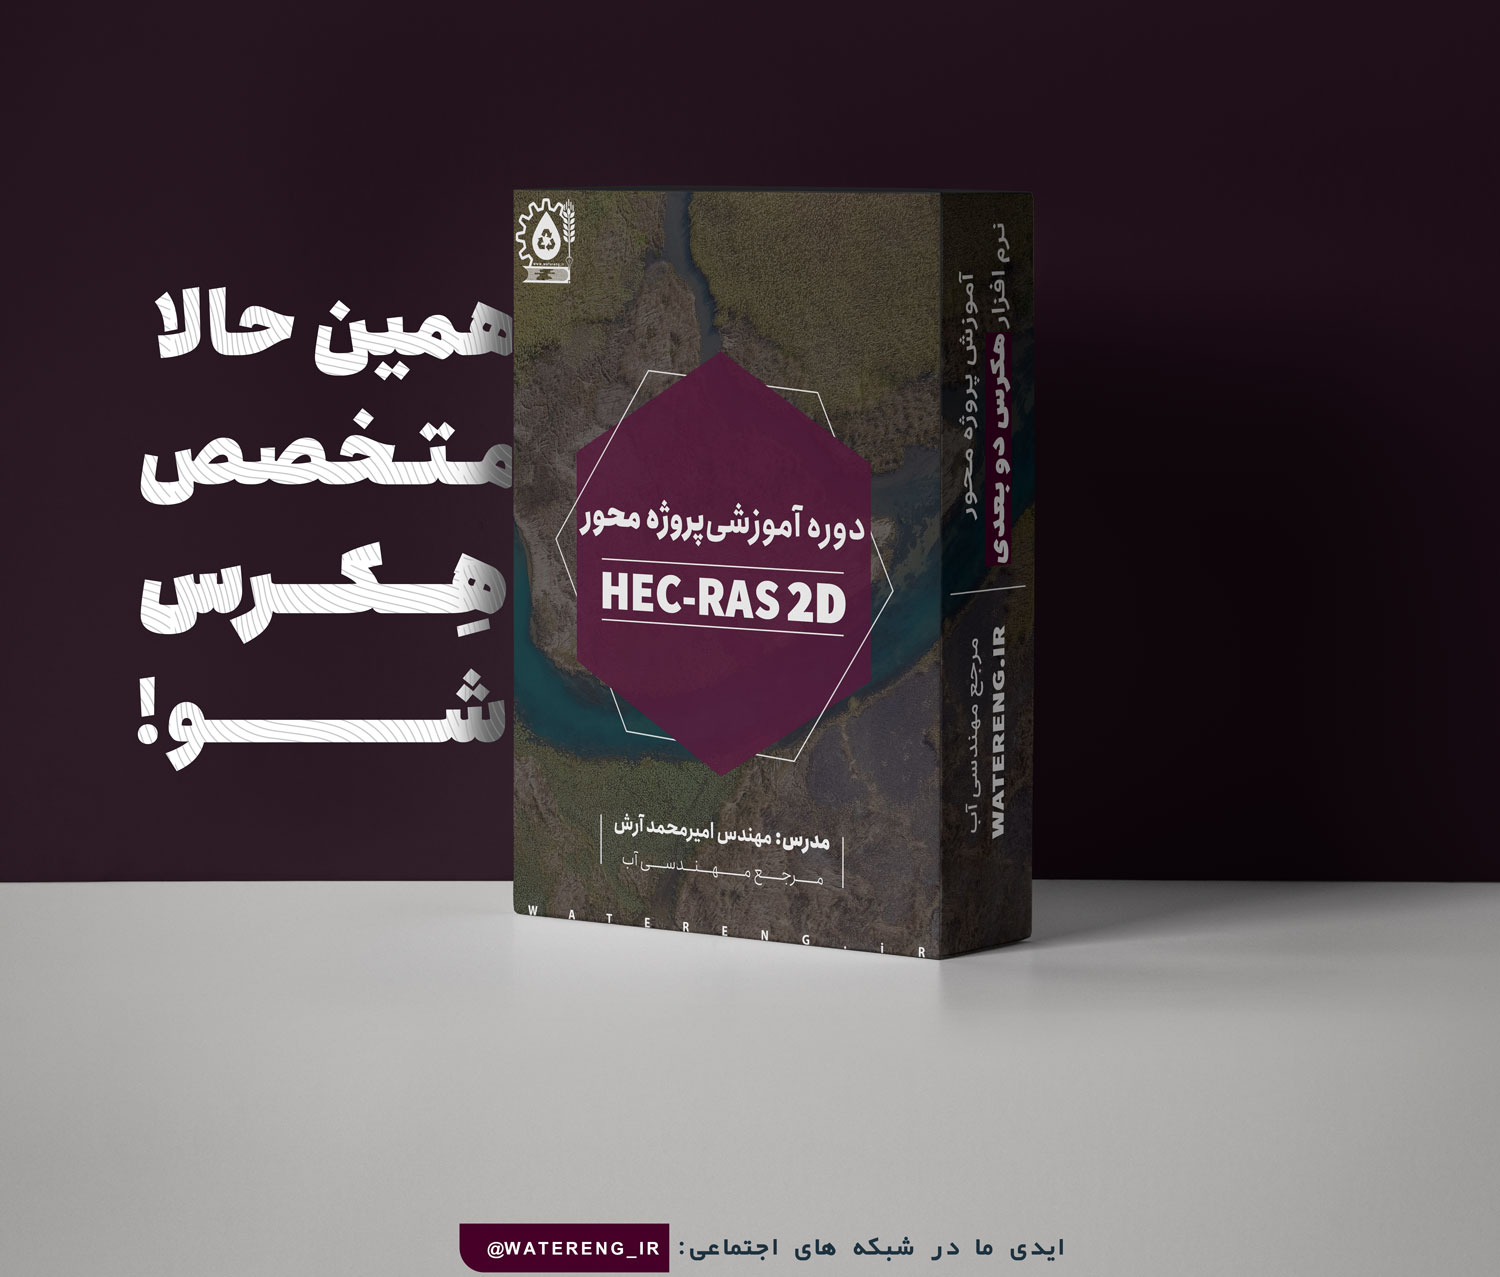 دوره آموزشی پروژه محور هکرس دوبعدی (HEC-RAS 2D)